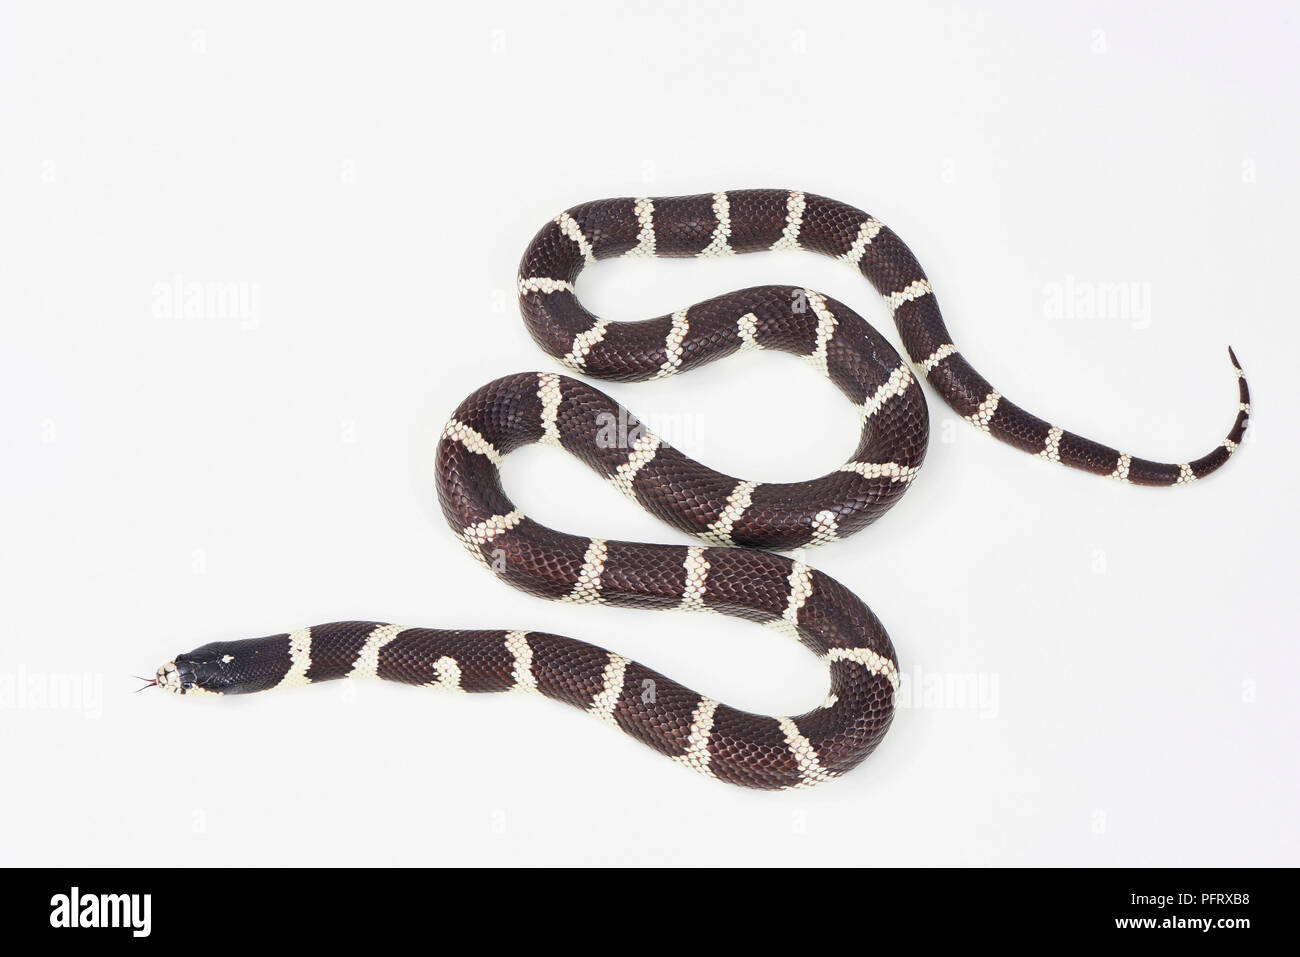 California King Snake, Lampropeltis californiae Stockfoto